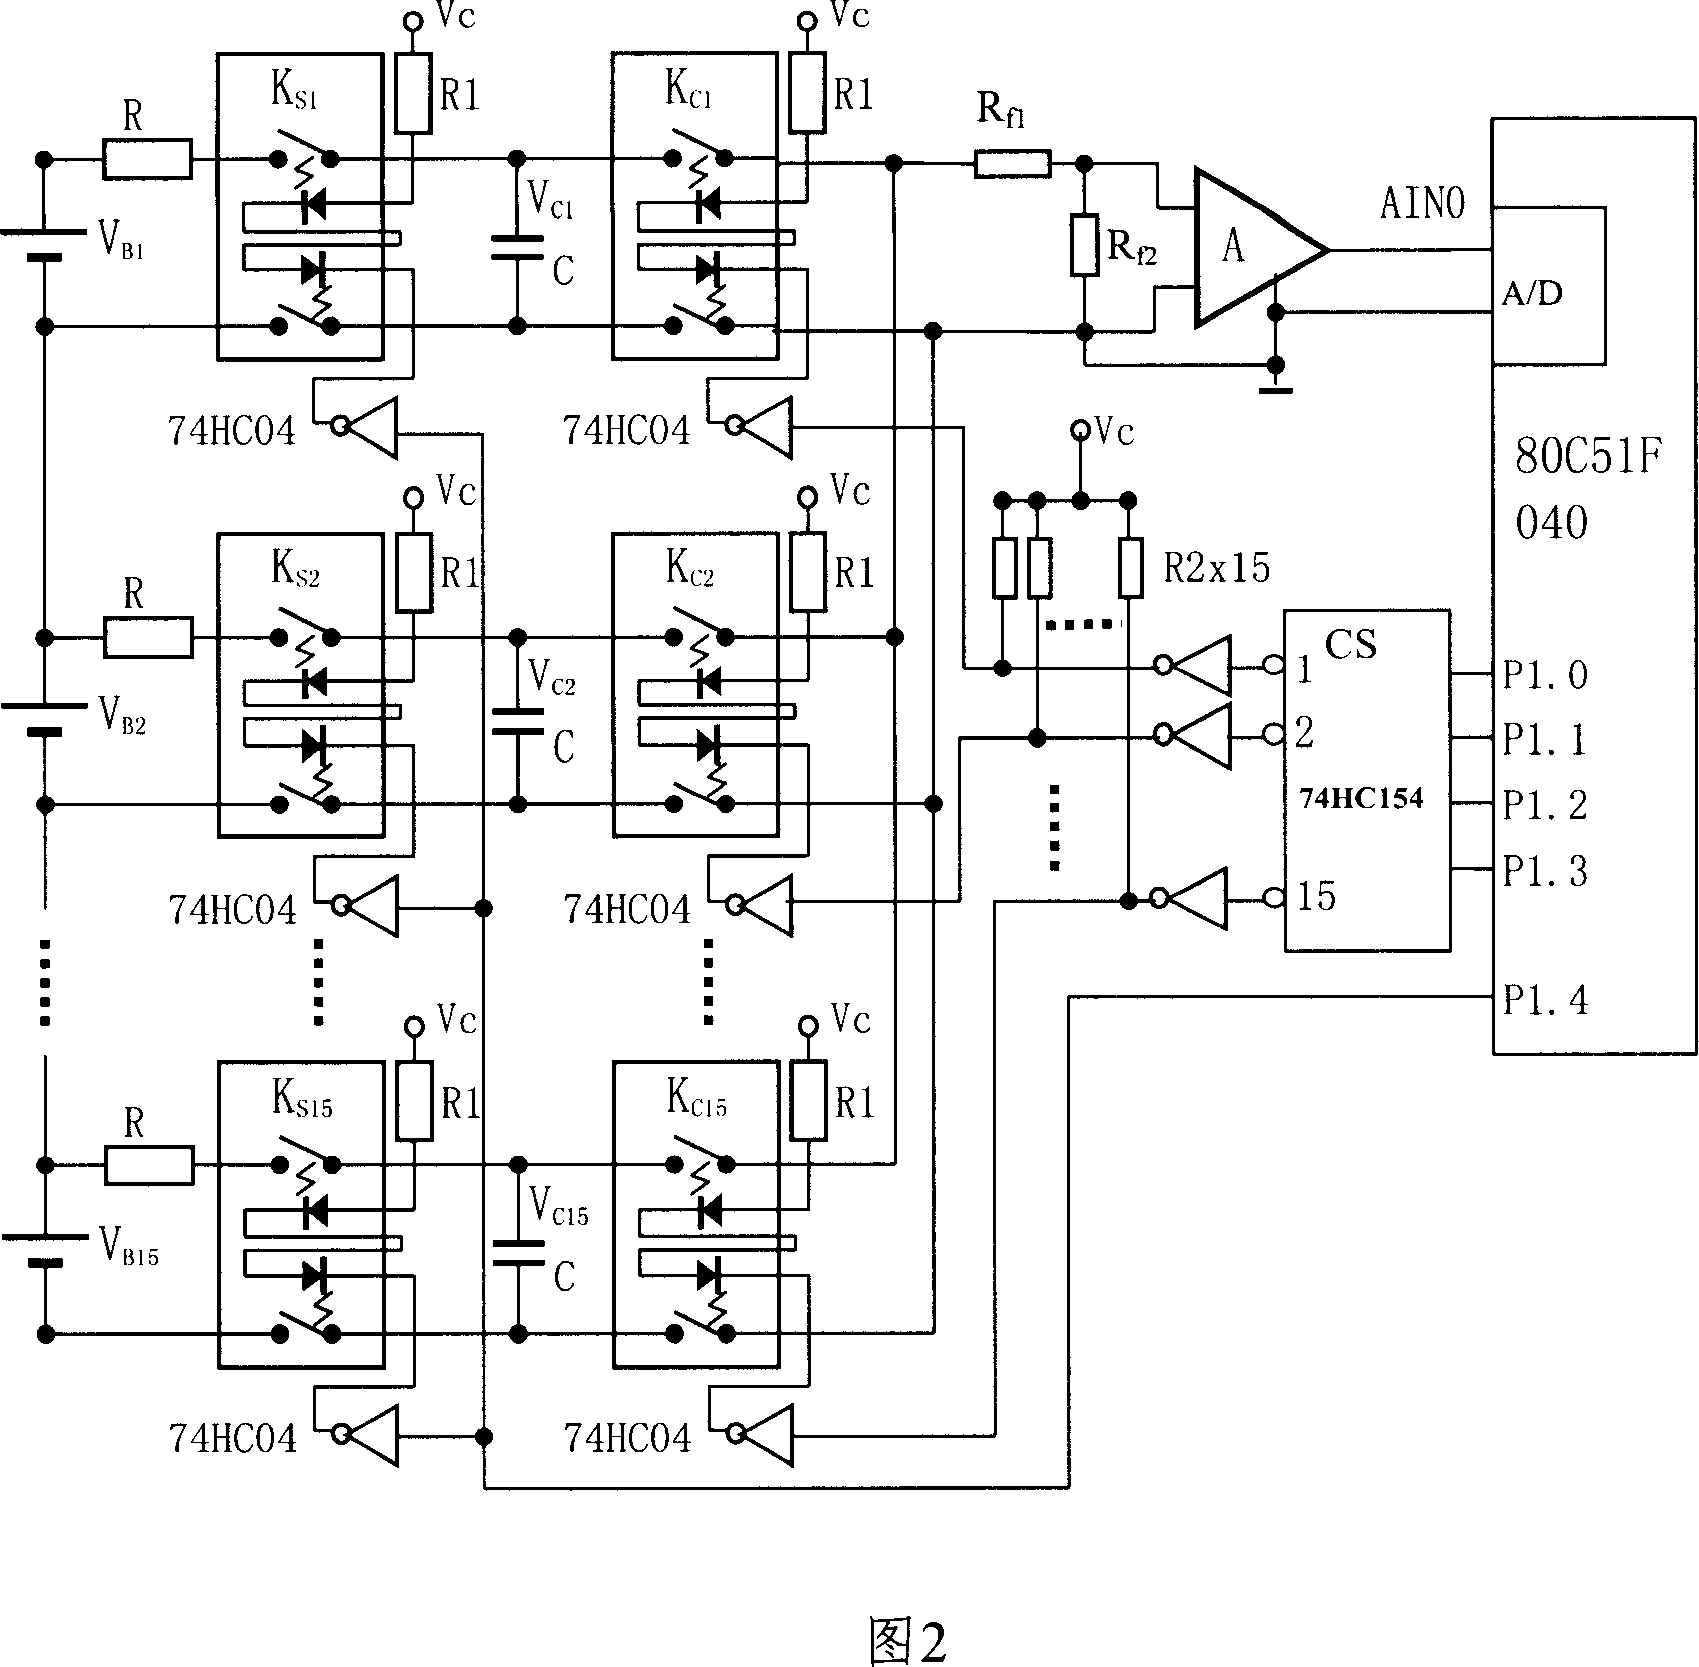 Circuit for measuring synchronized sampler of flying capacitance